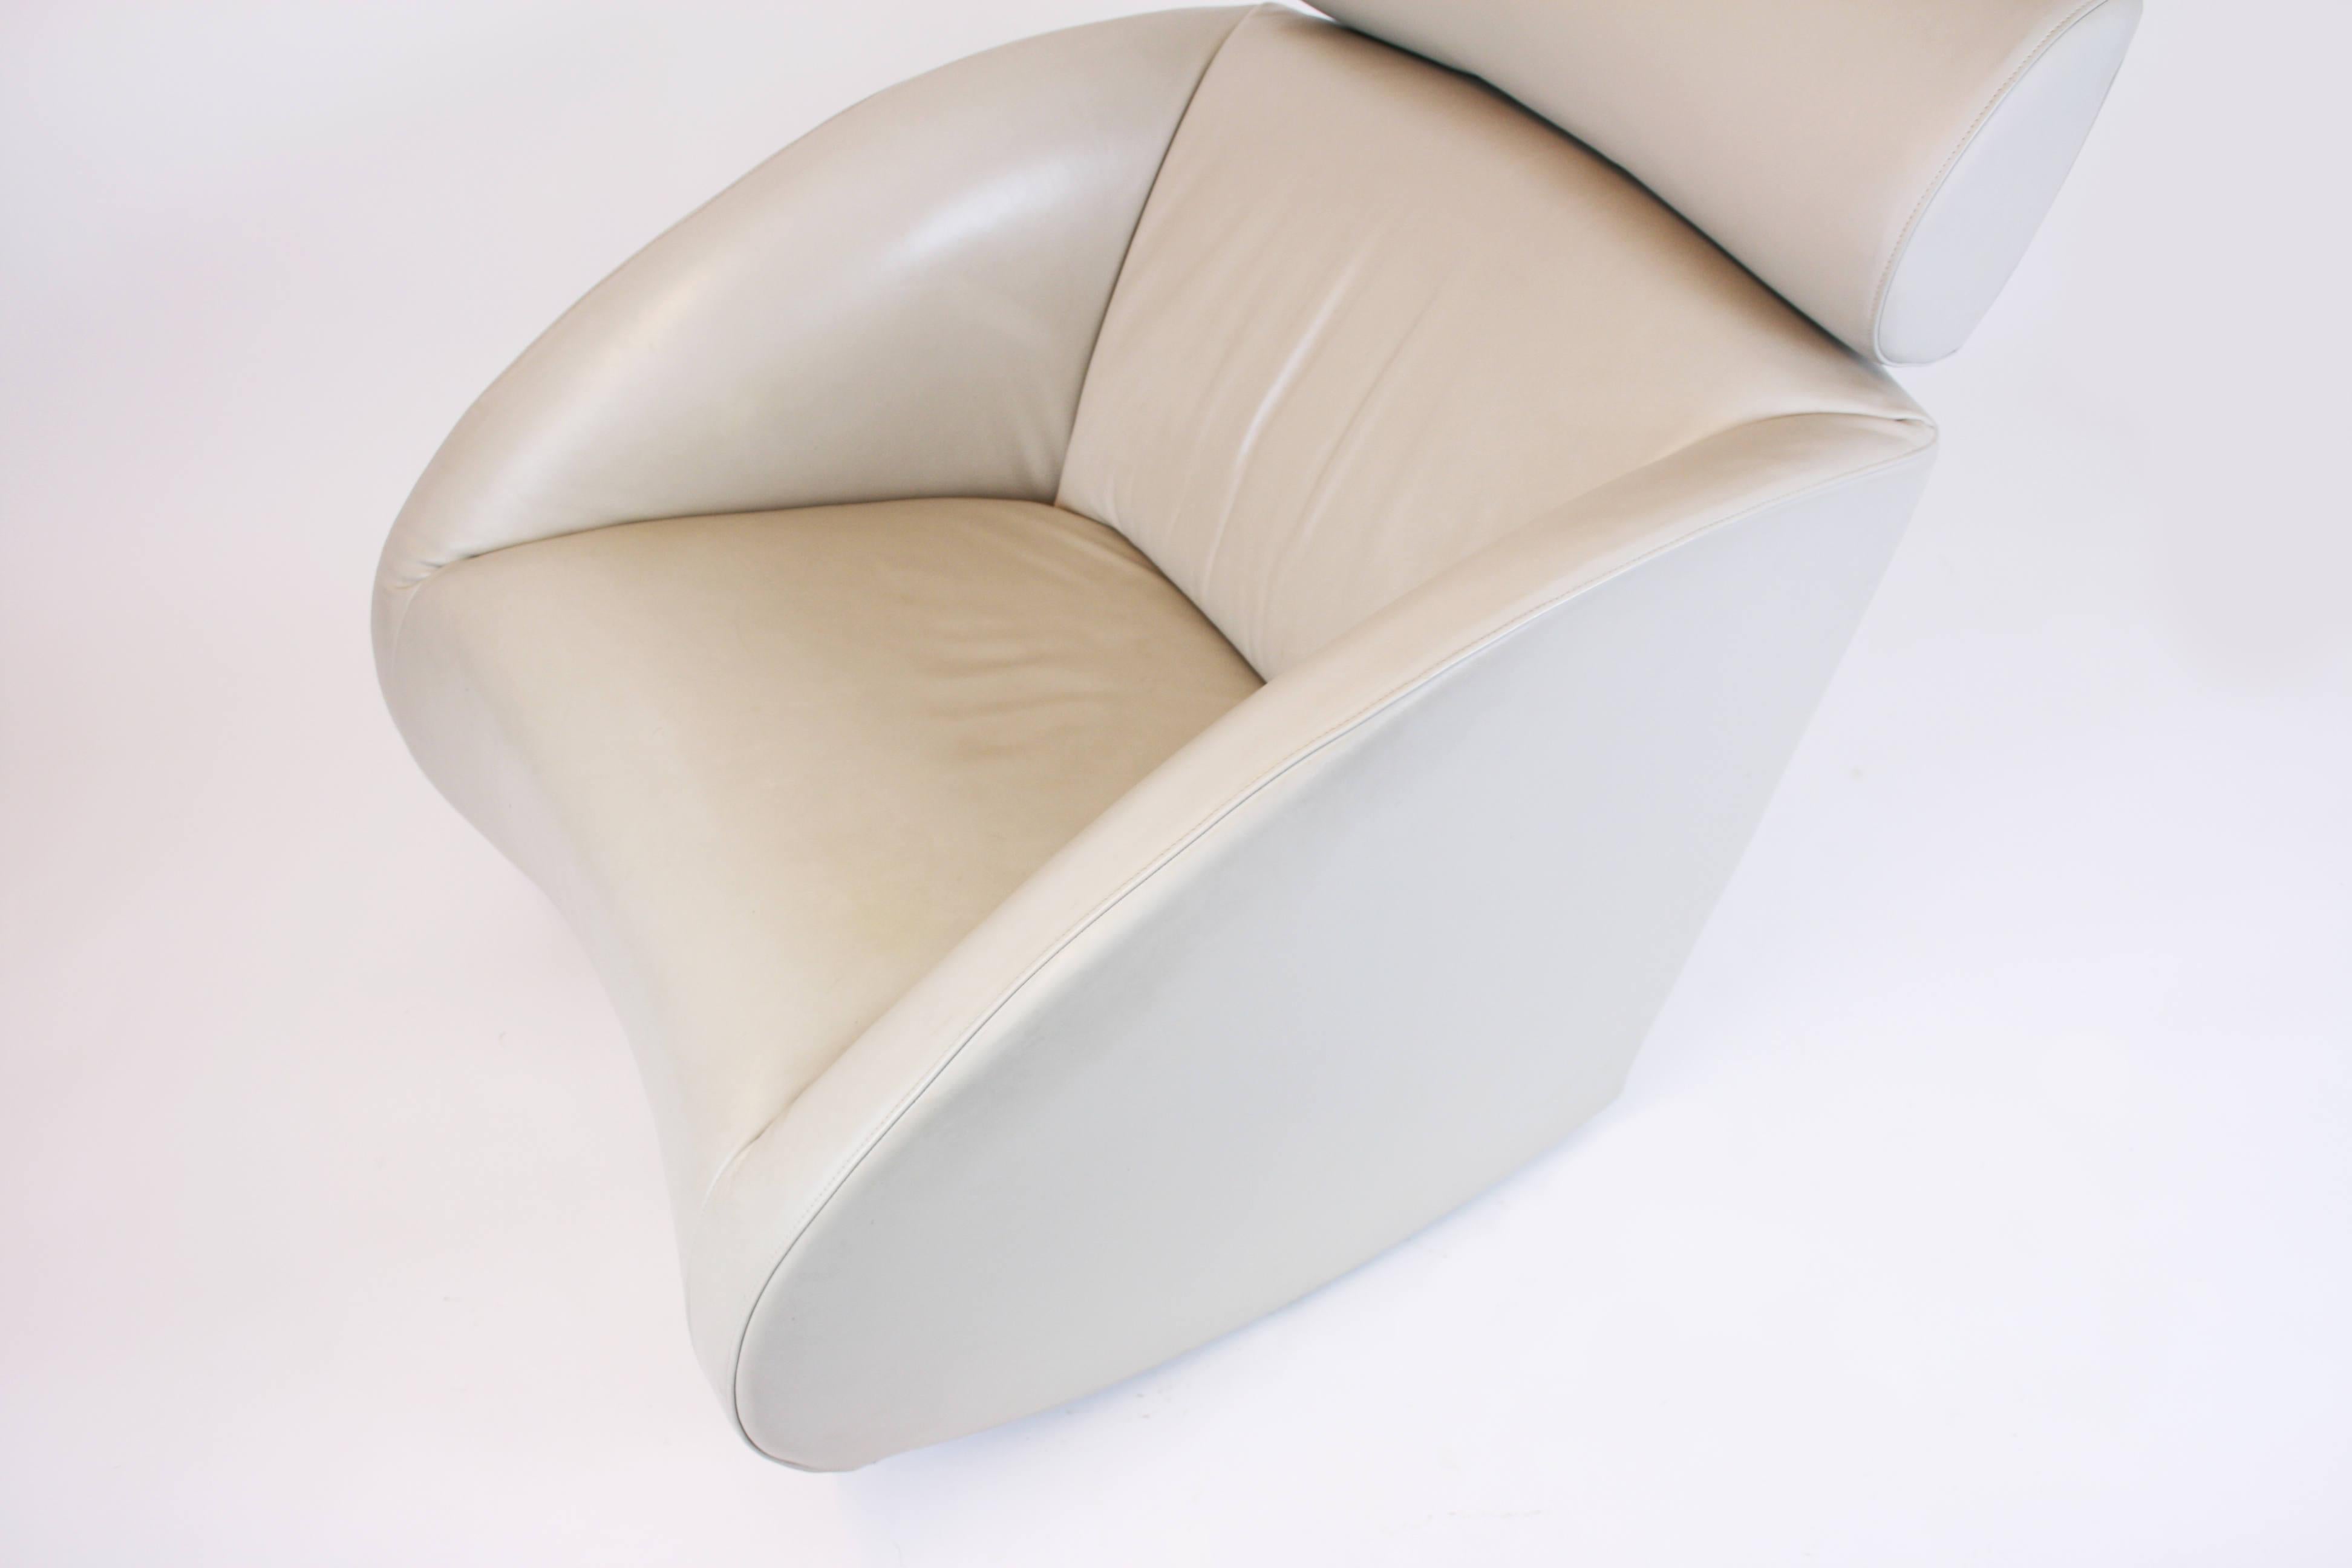 Late 20th Century Rocking Chair Mama Baleri Italy Beige Leather Design by Denis Santachiara, 1995 For Sale